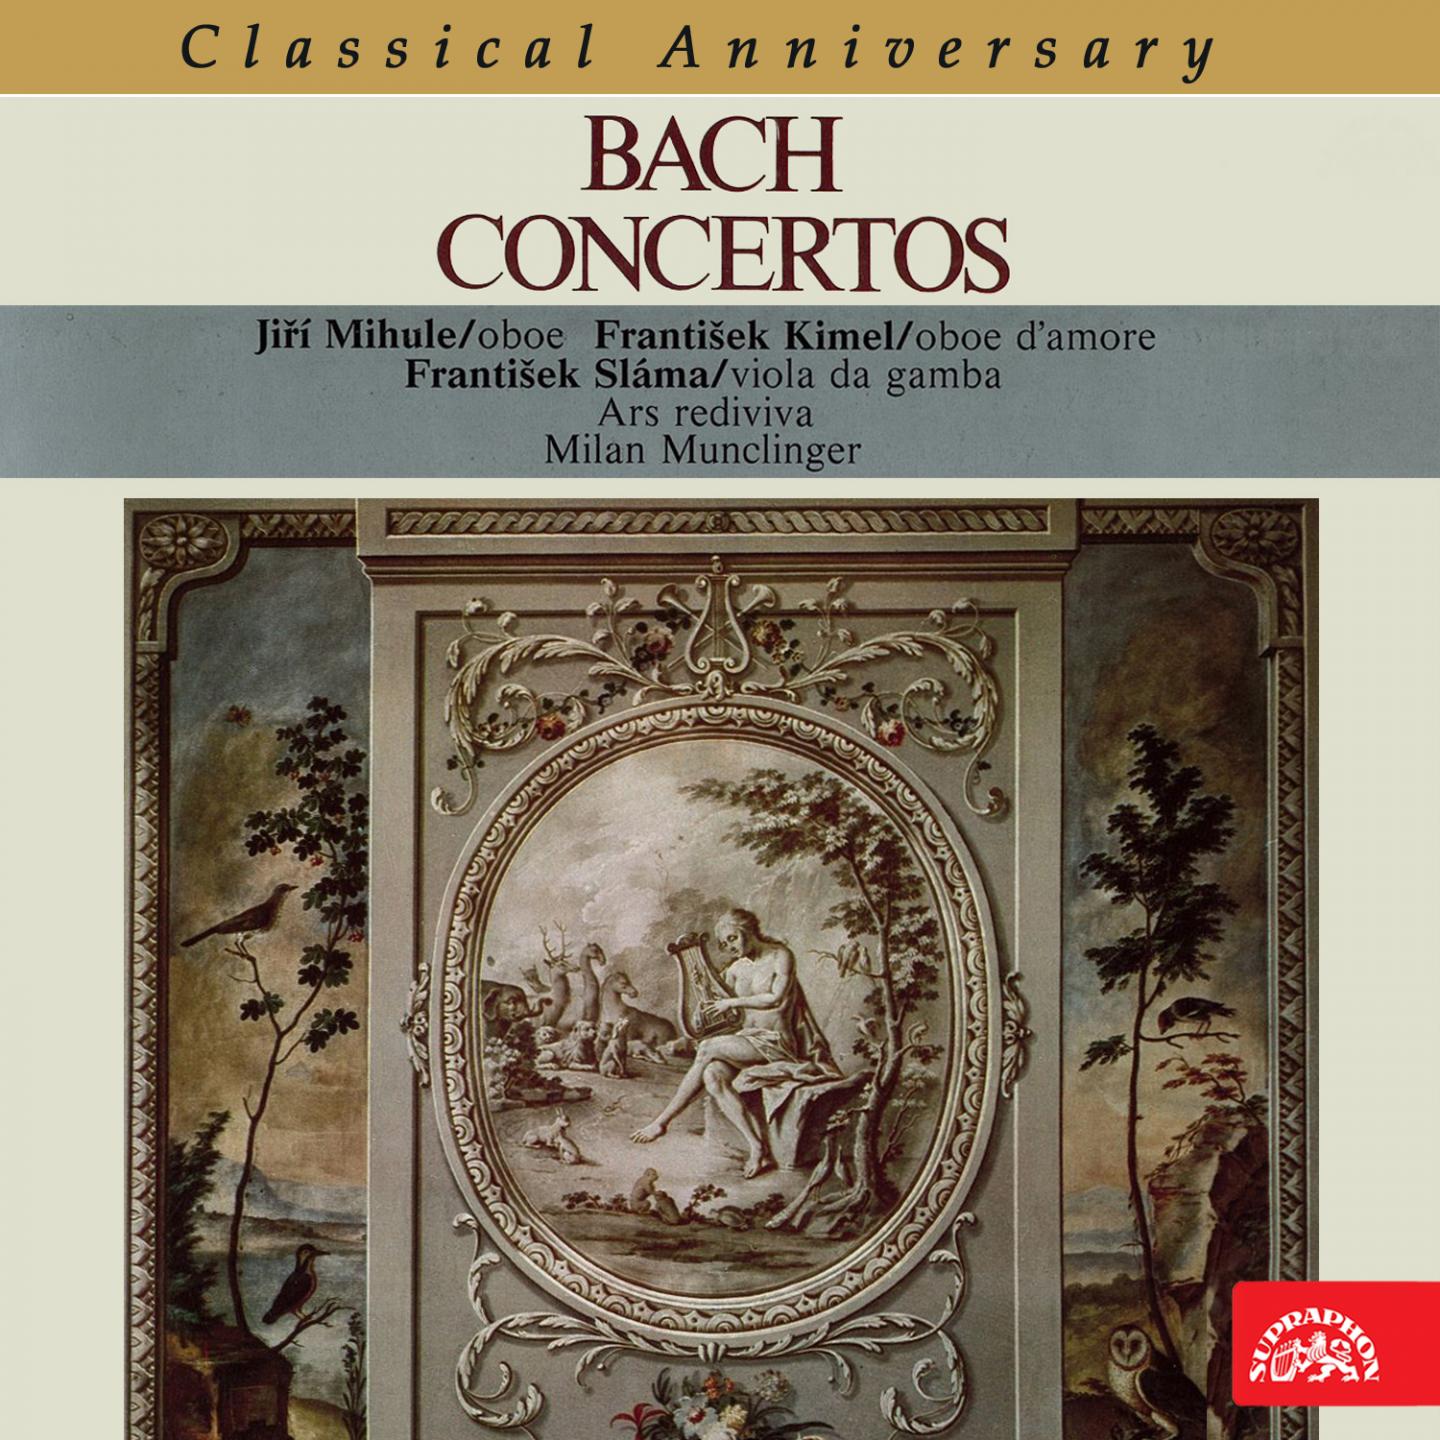 Concerto in G Minor, BWV 1056R: III. Presto